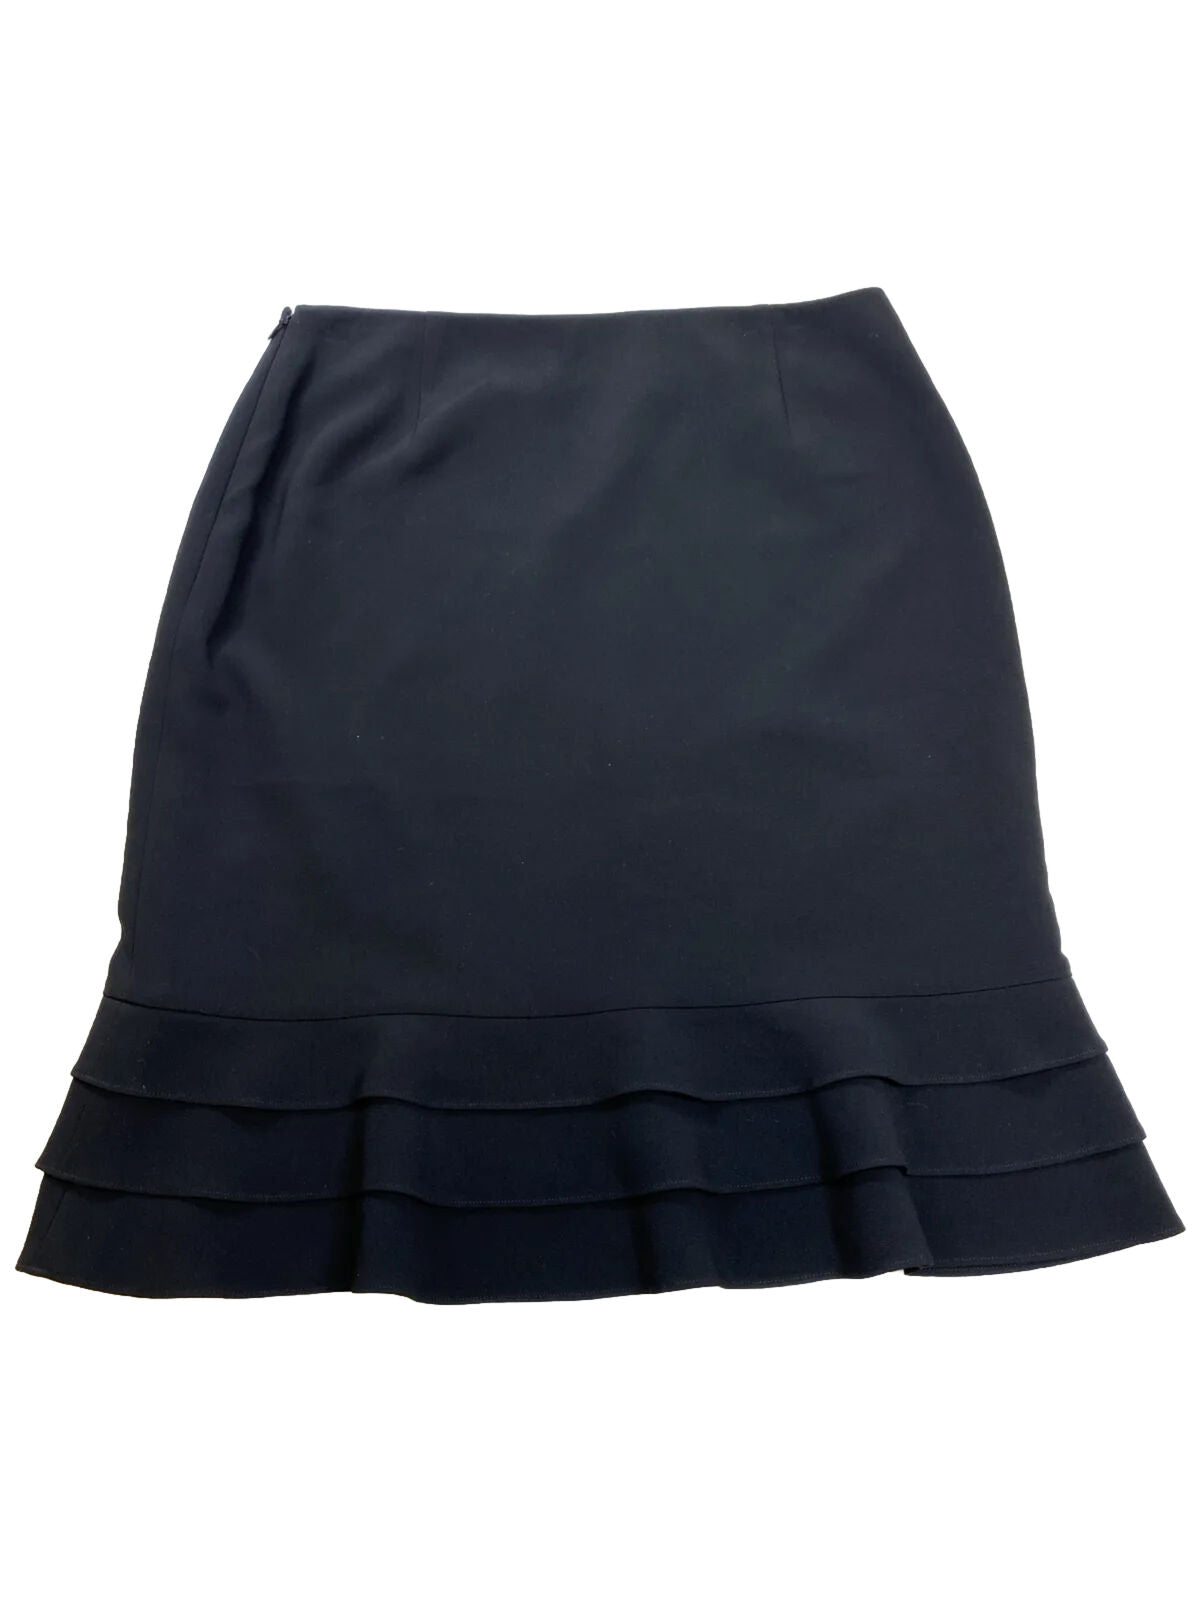 Ann Taylor Women's Black Lined Tiered Bottom Skirt - 12